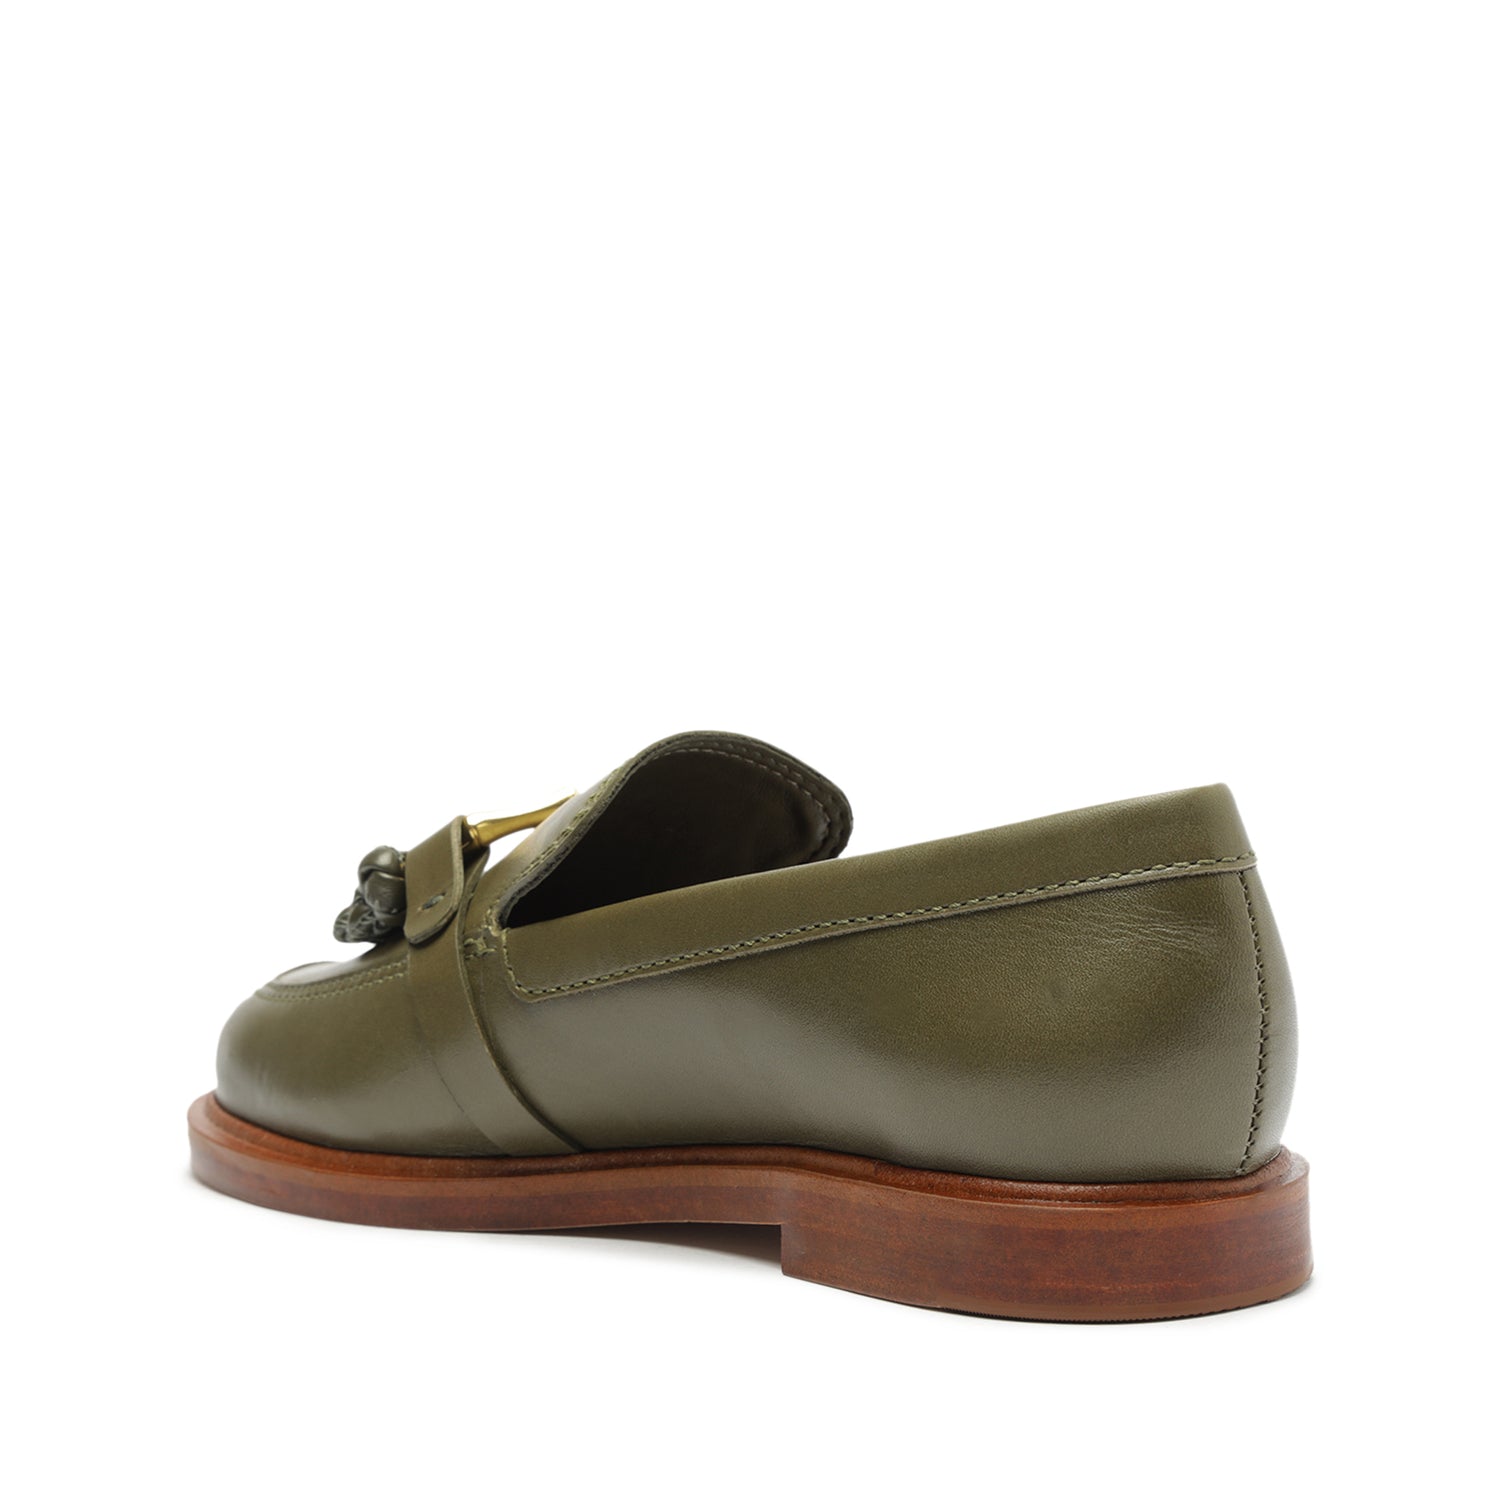 Rhino Leather Flat Flats Pre Fall 23    - Schutz Shoes